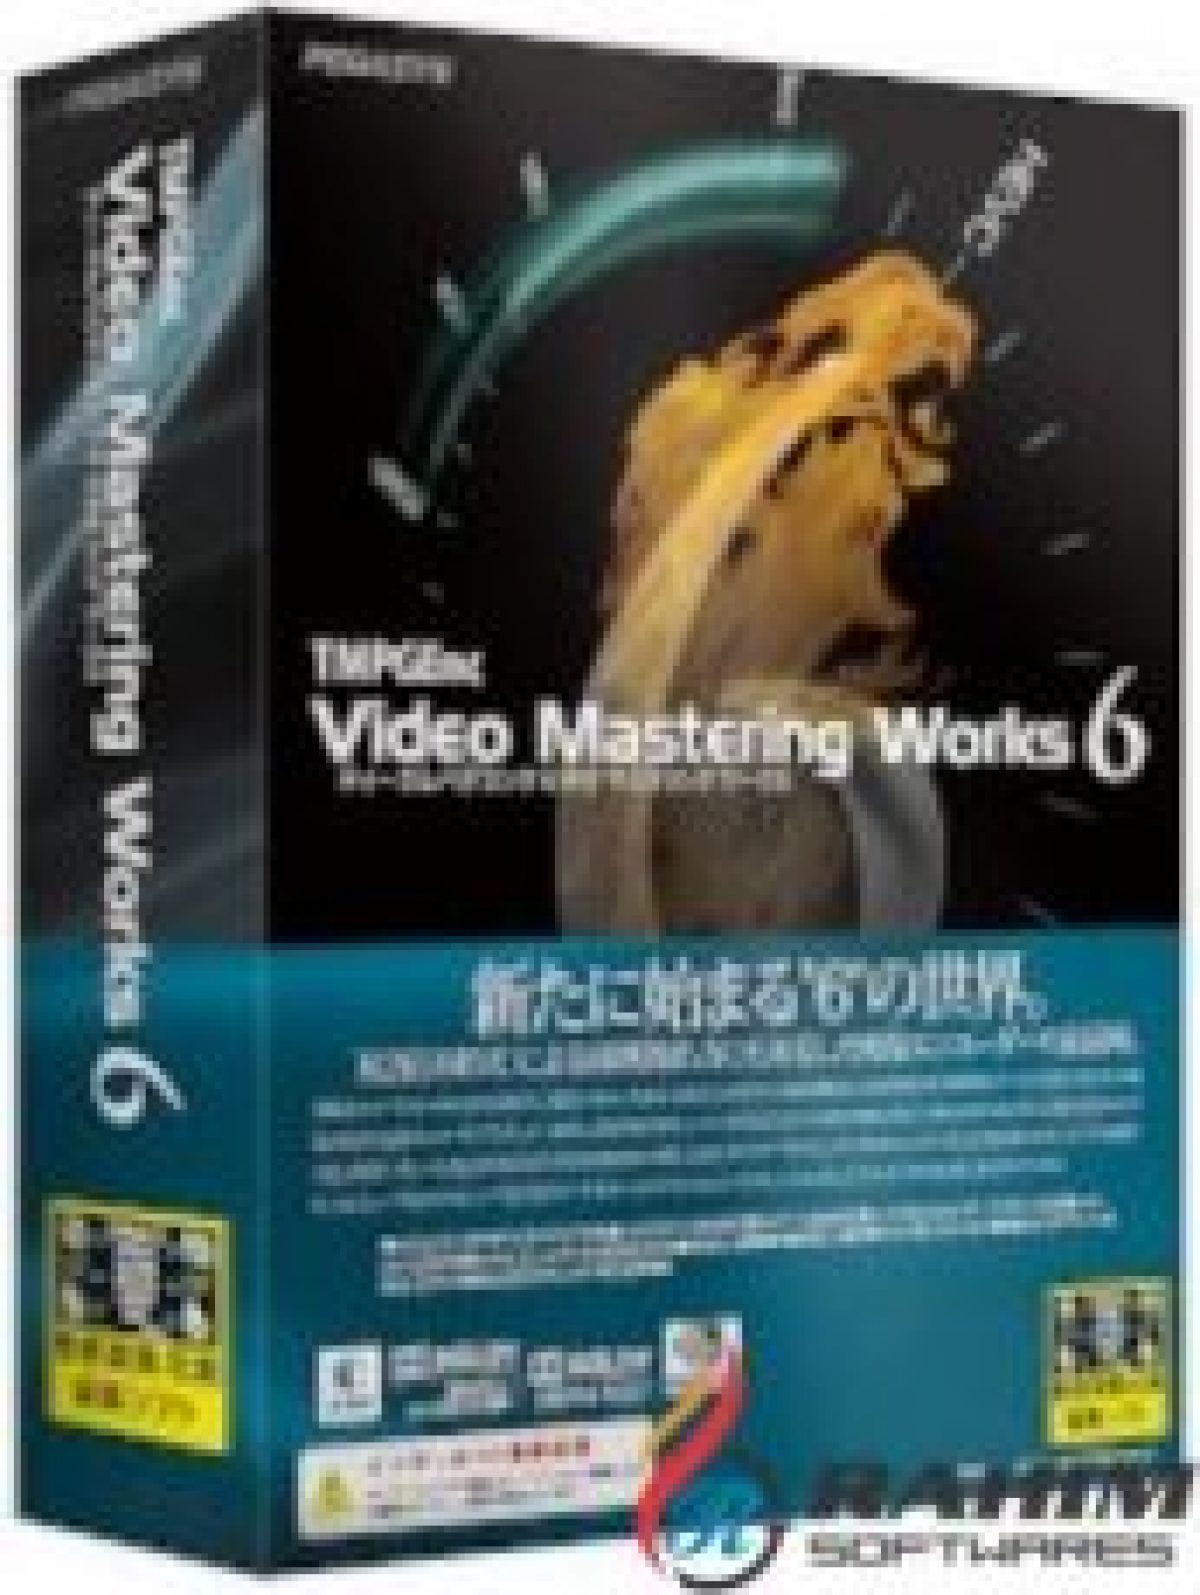 tmpgenc video mastering works 7 crack